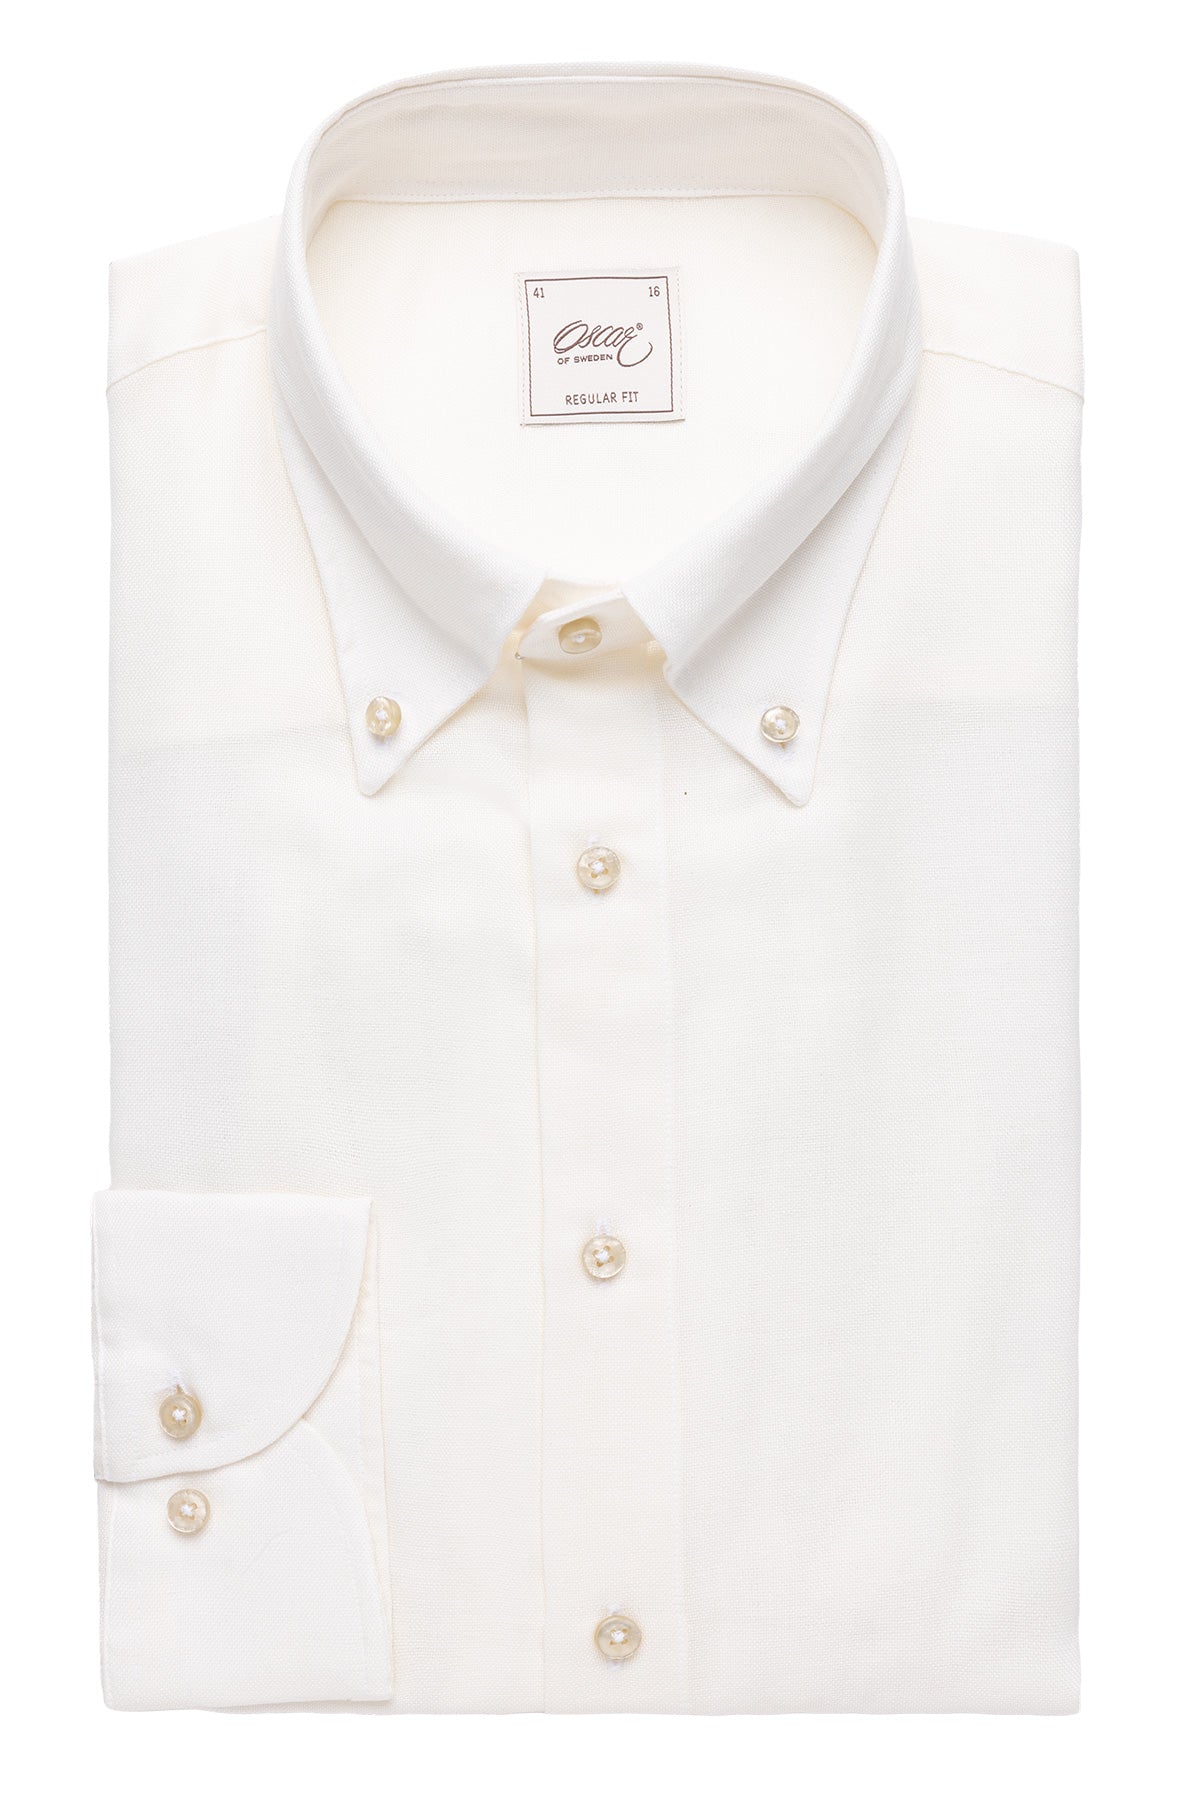 Off white button down regular fit shirt